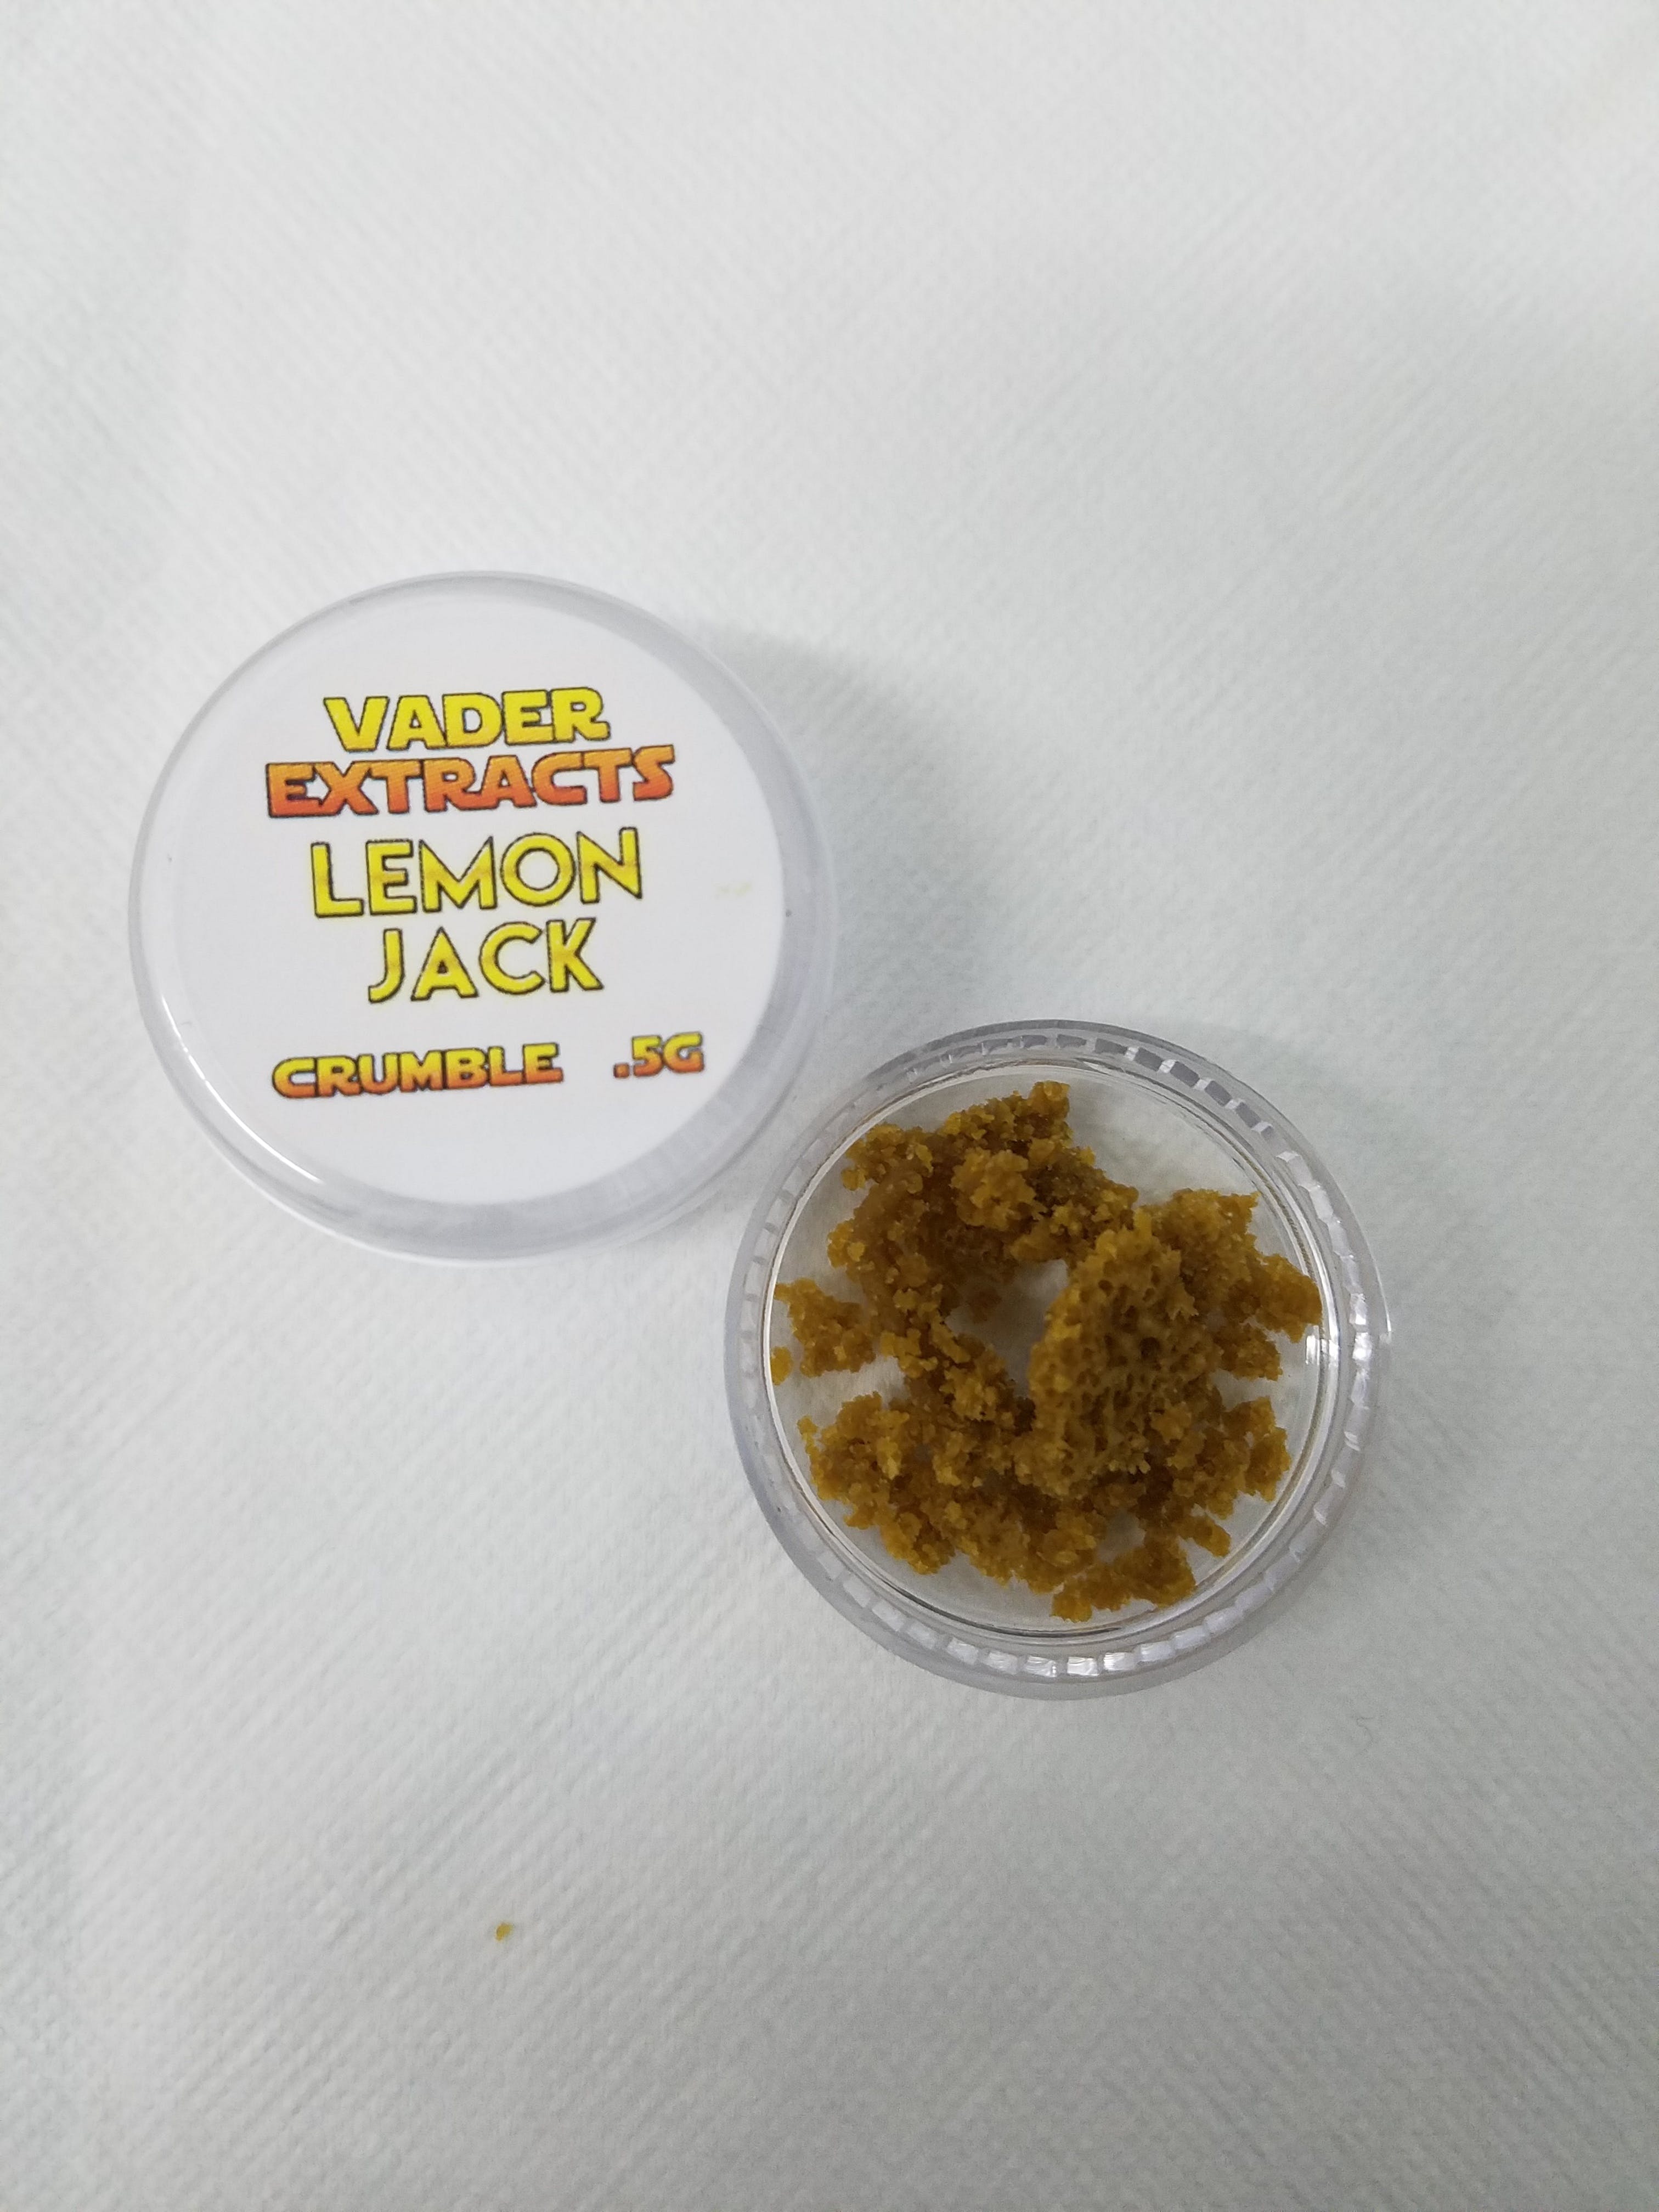 wax-vader-extracts-trim-run-lemon-jack